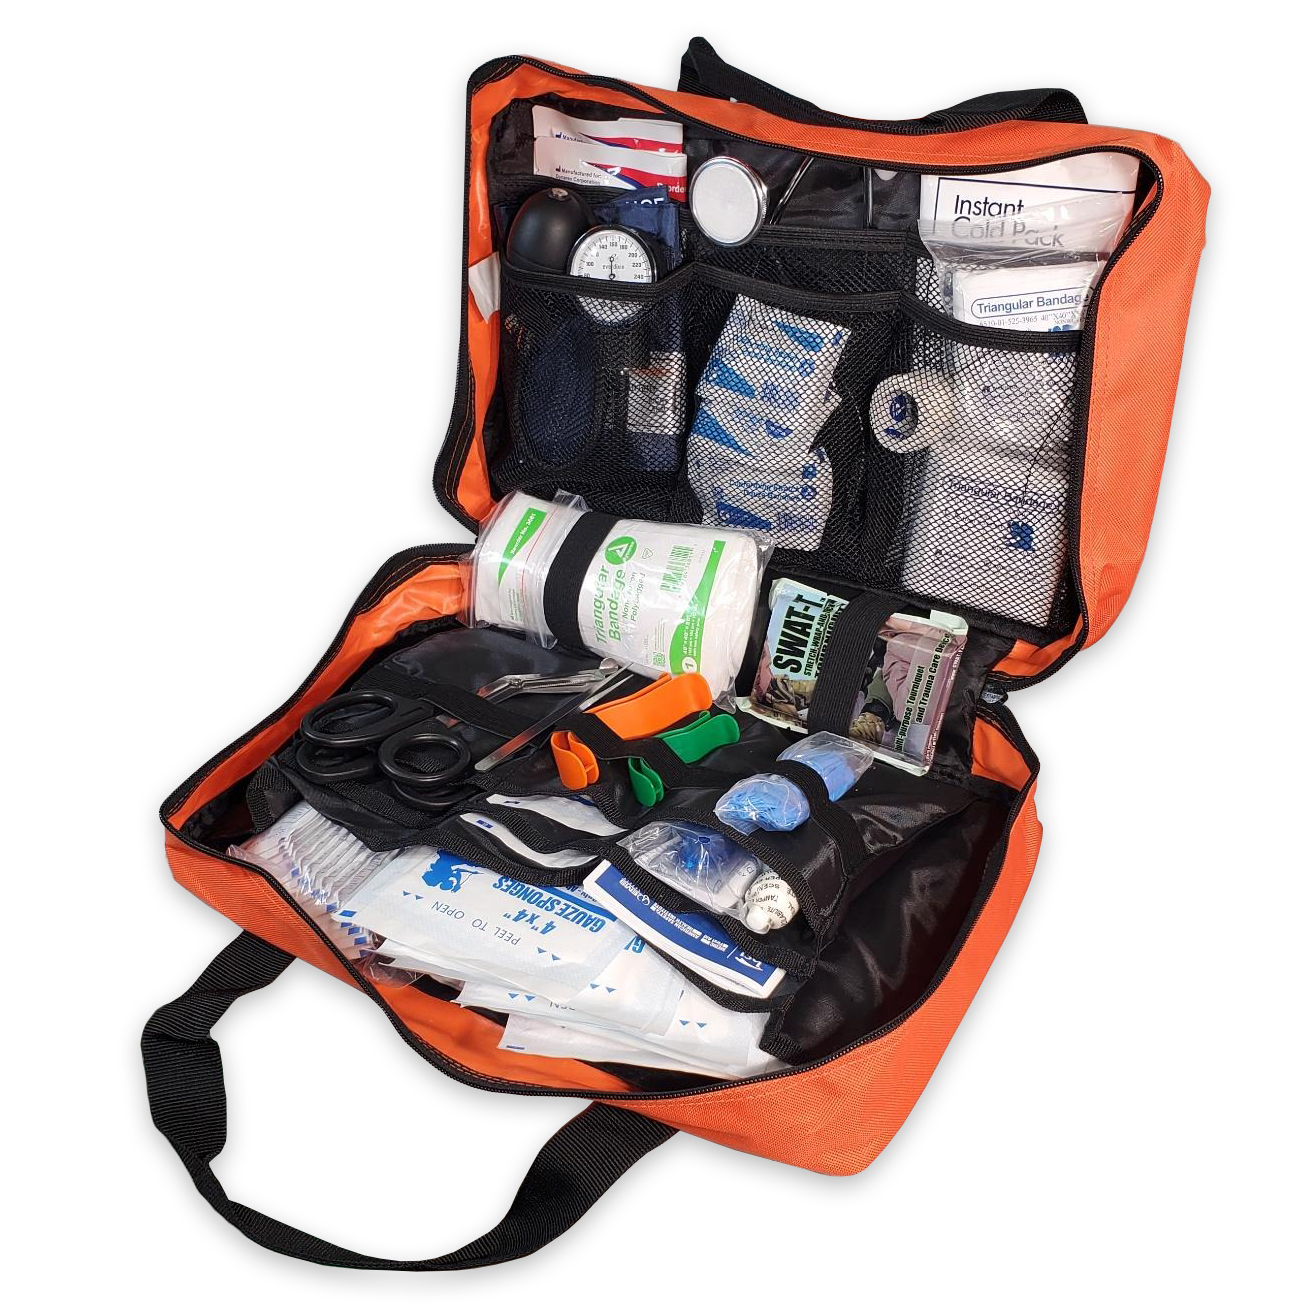 USKITS EMT Trauma Kit Bag - Essential